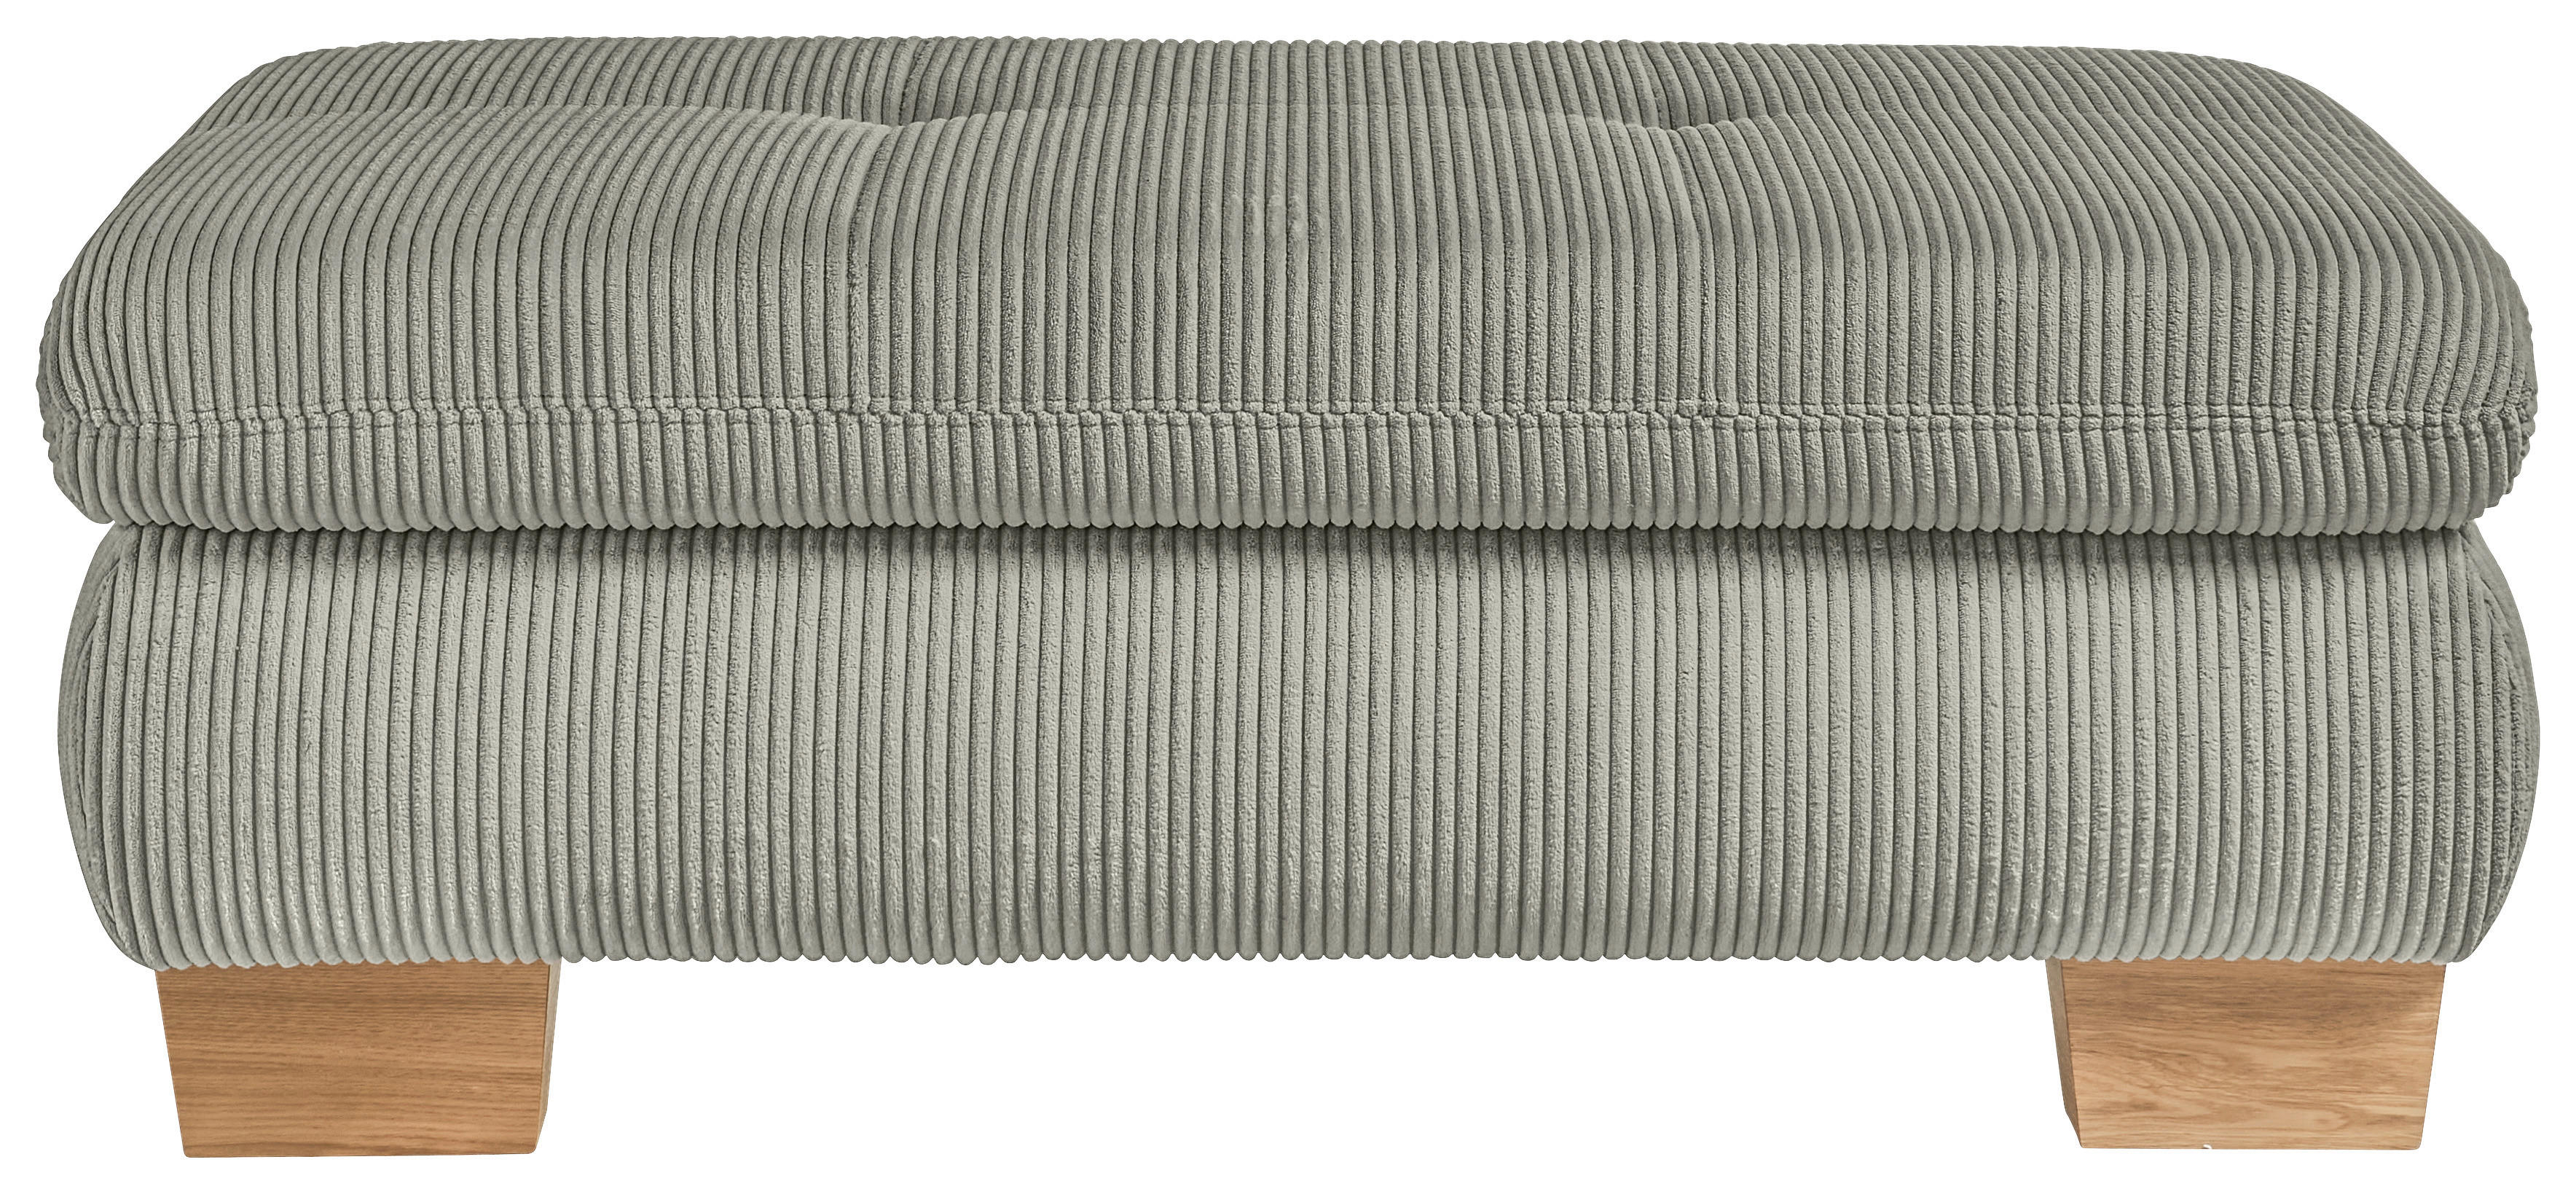 HOCKER Cord Olivgrün  - Eiche Bianco/Olivgrün, KONVENTIONELL, Holz/Textil (129/49/64cm) - SetOne by Musterring